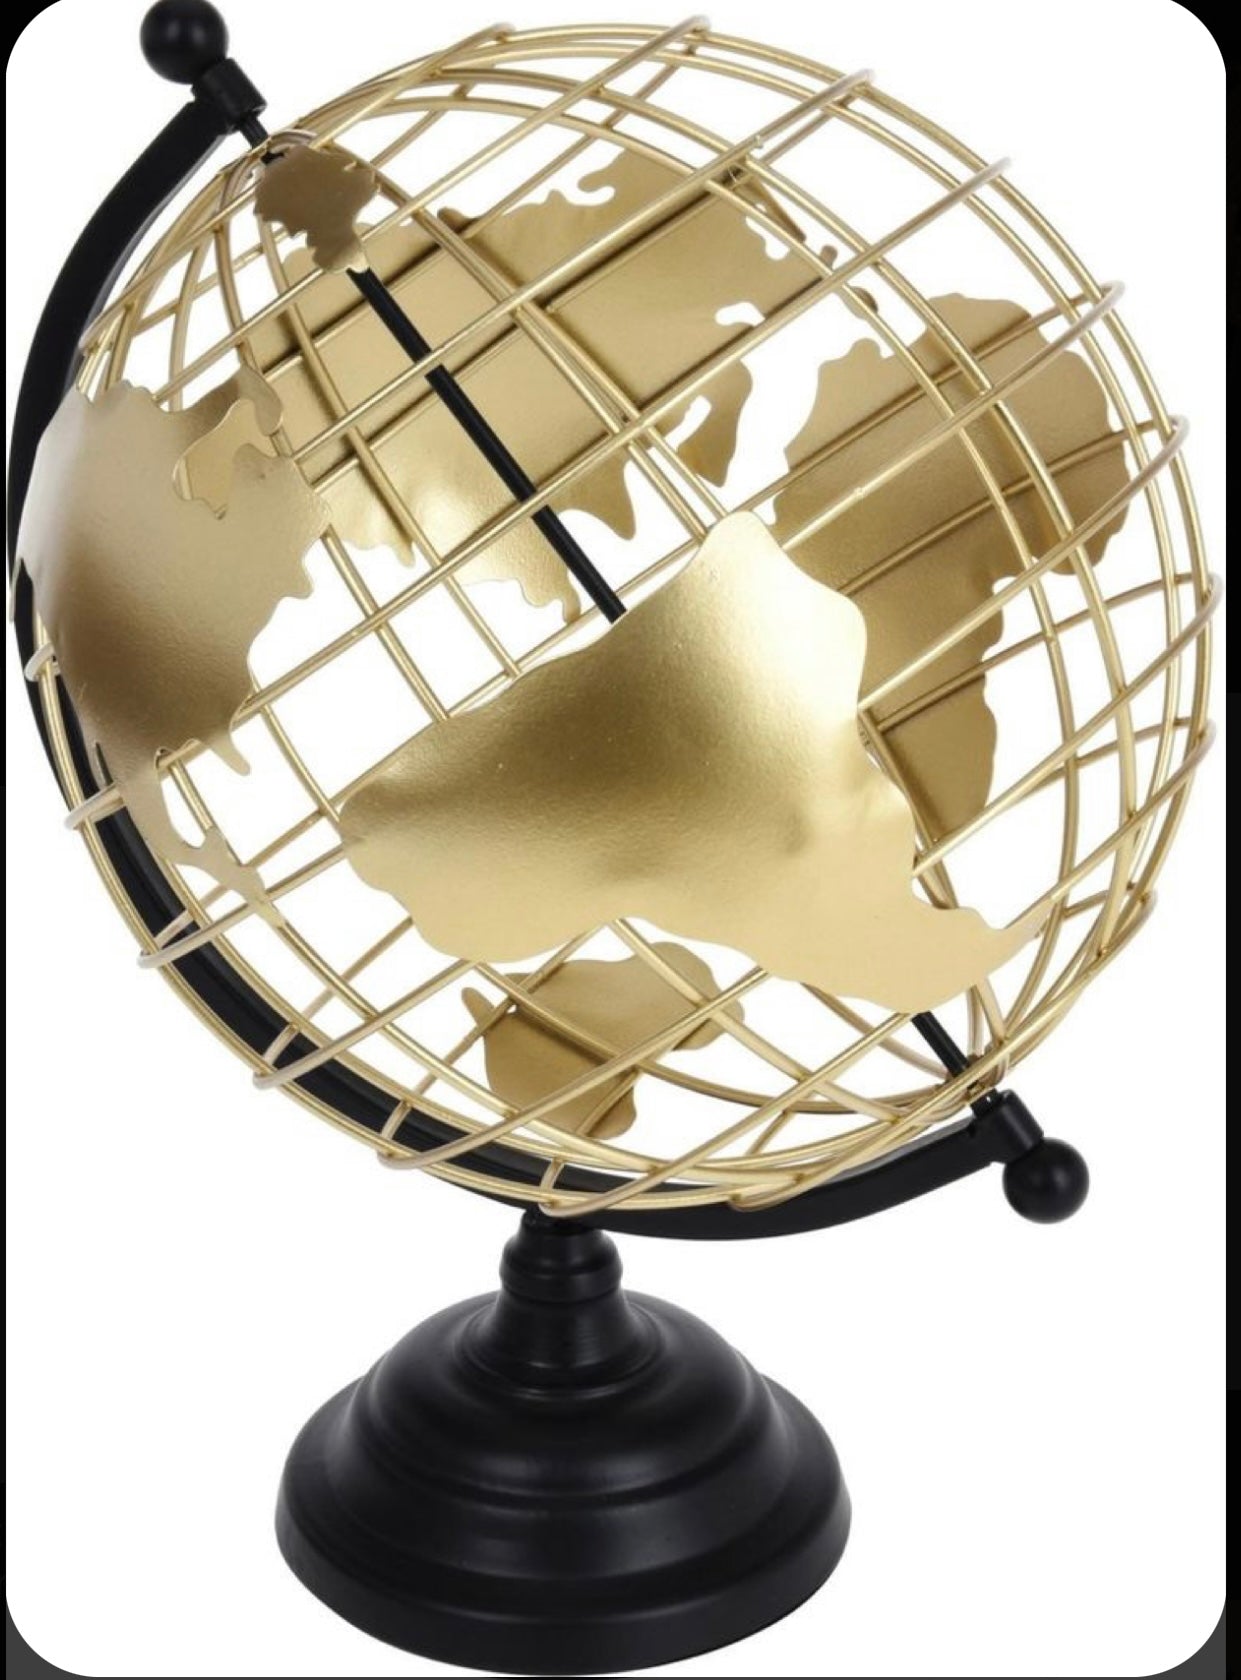 Metallic and plastic globe